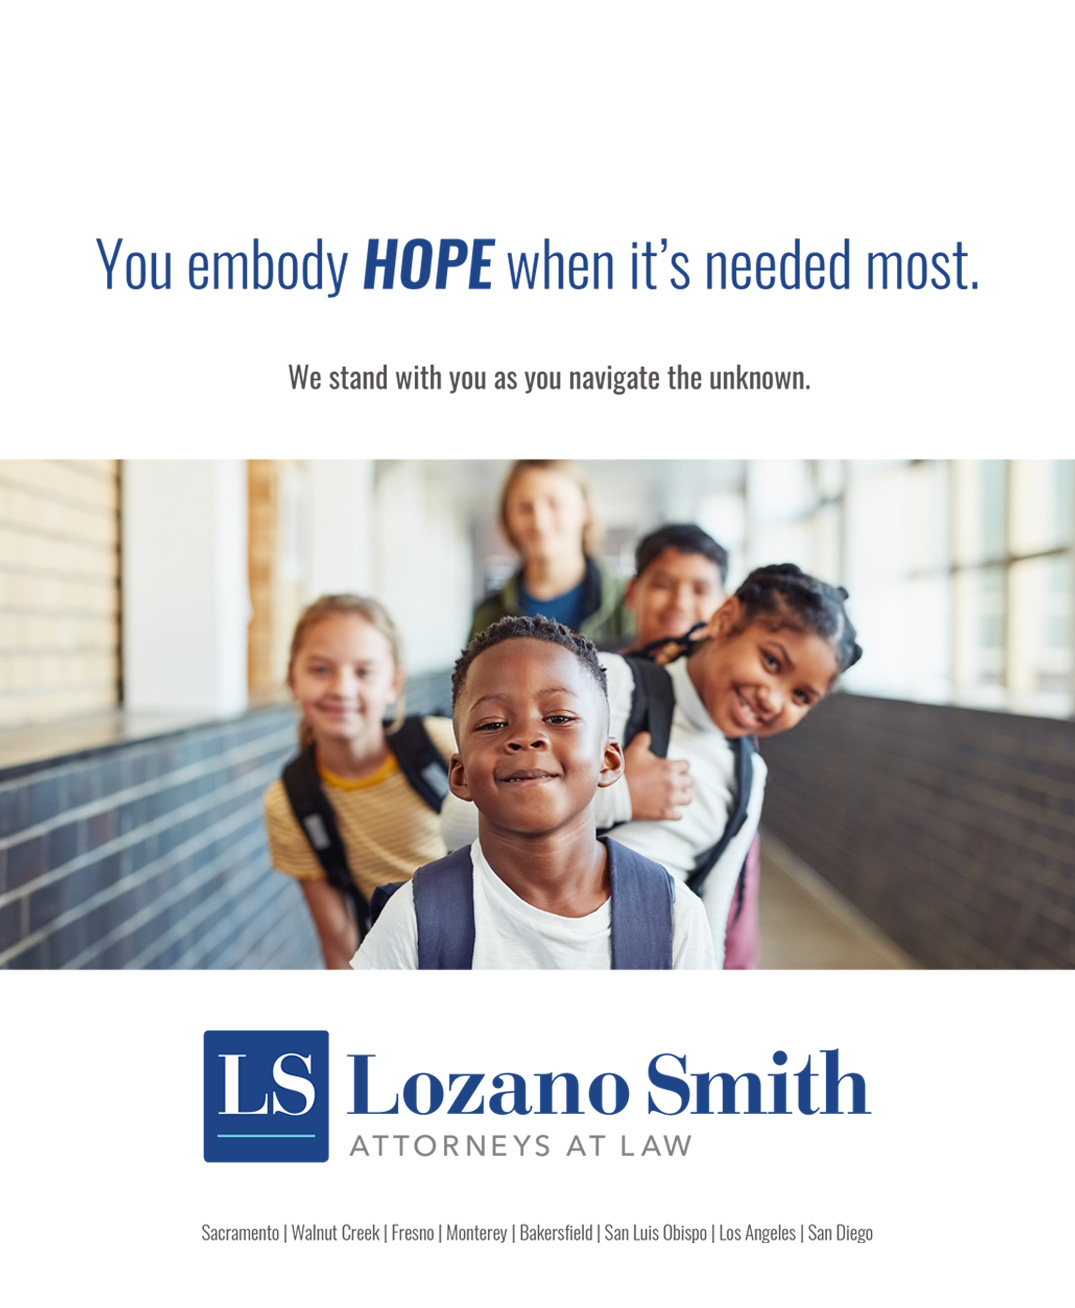 Lozano Smith Attorneys at Law Advertisement